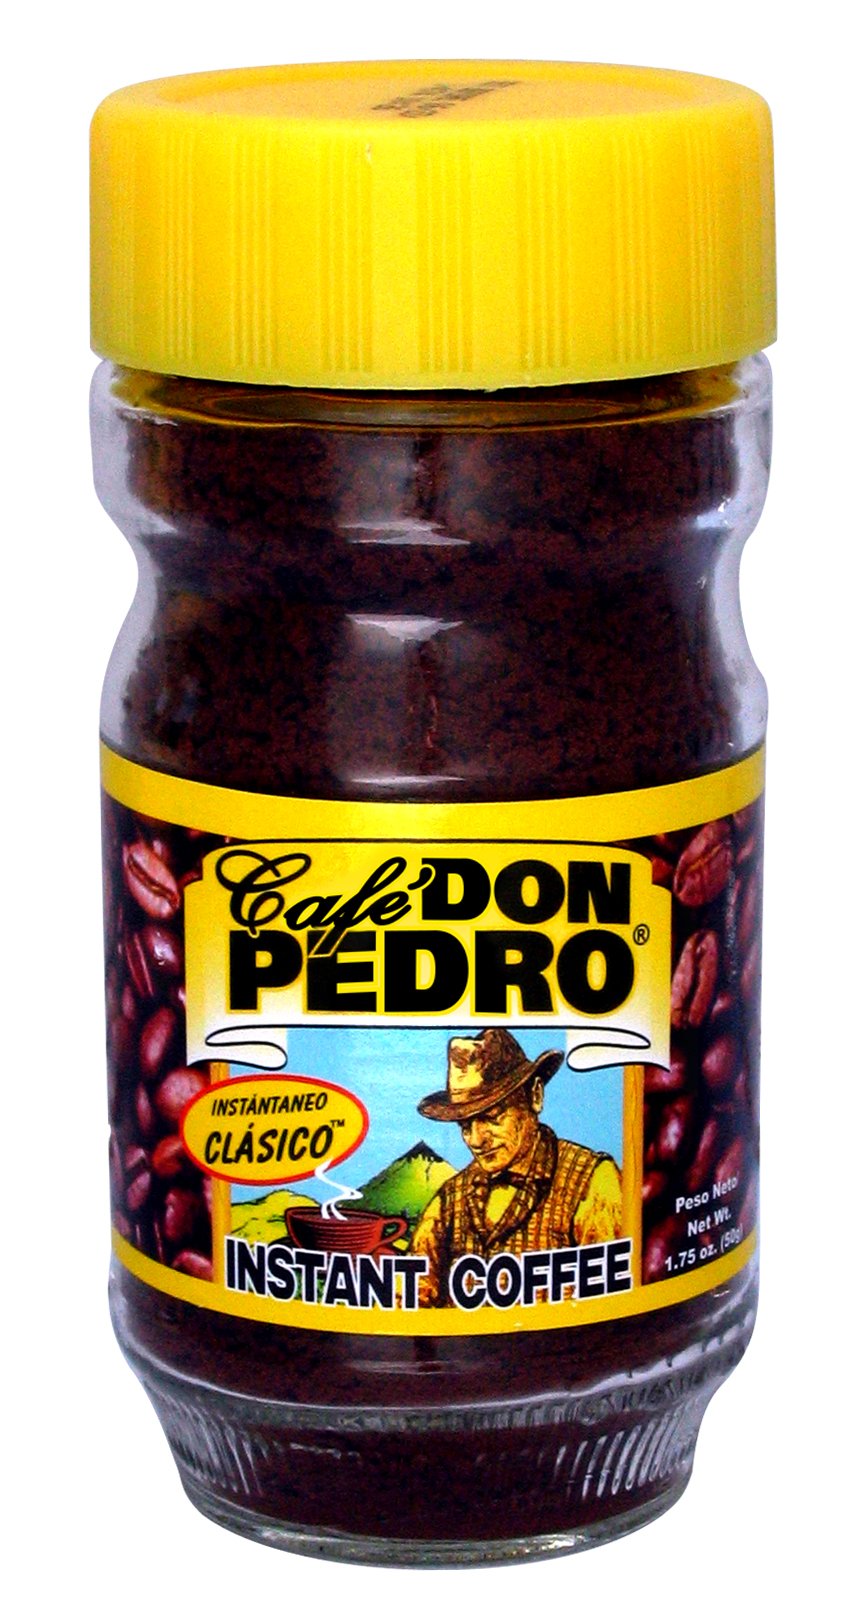 Edon Pedro Coffee Maker, 1 L